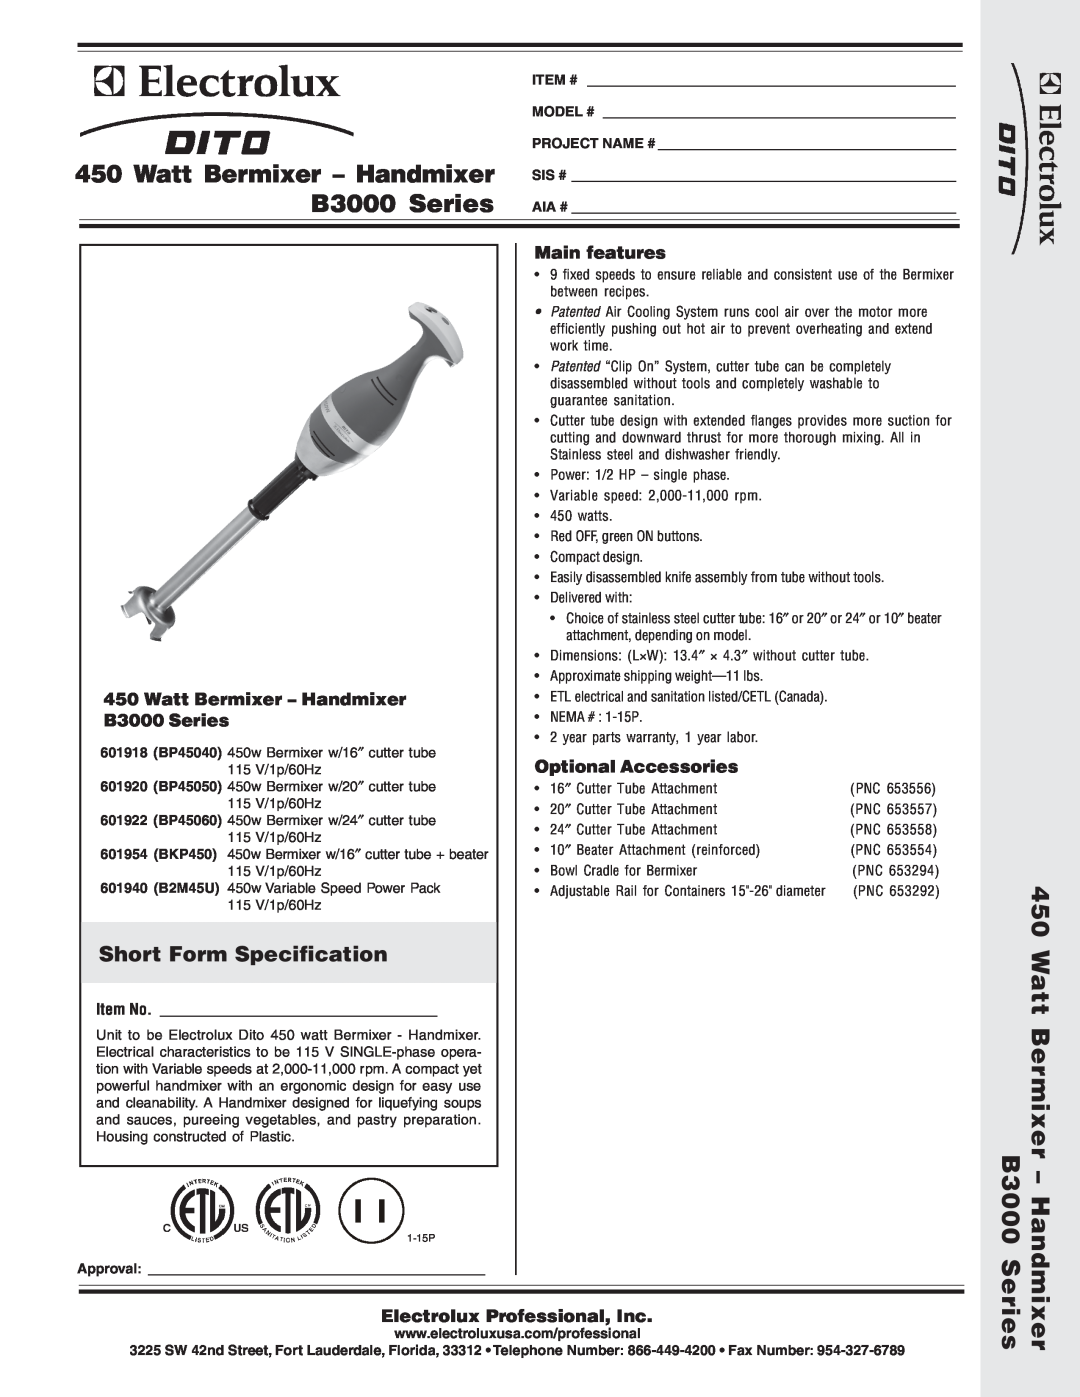 Electrolux BP45040 dimensions Short Form Specification, Item No, Watt Bermixer - Handmixer, B3000 Series, Main features 